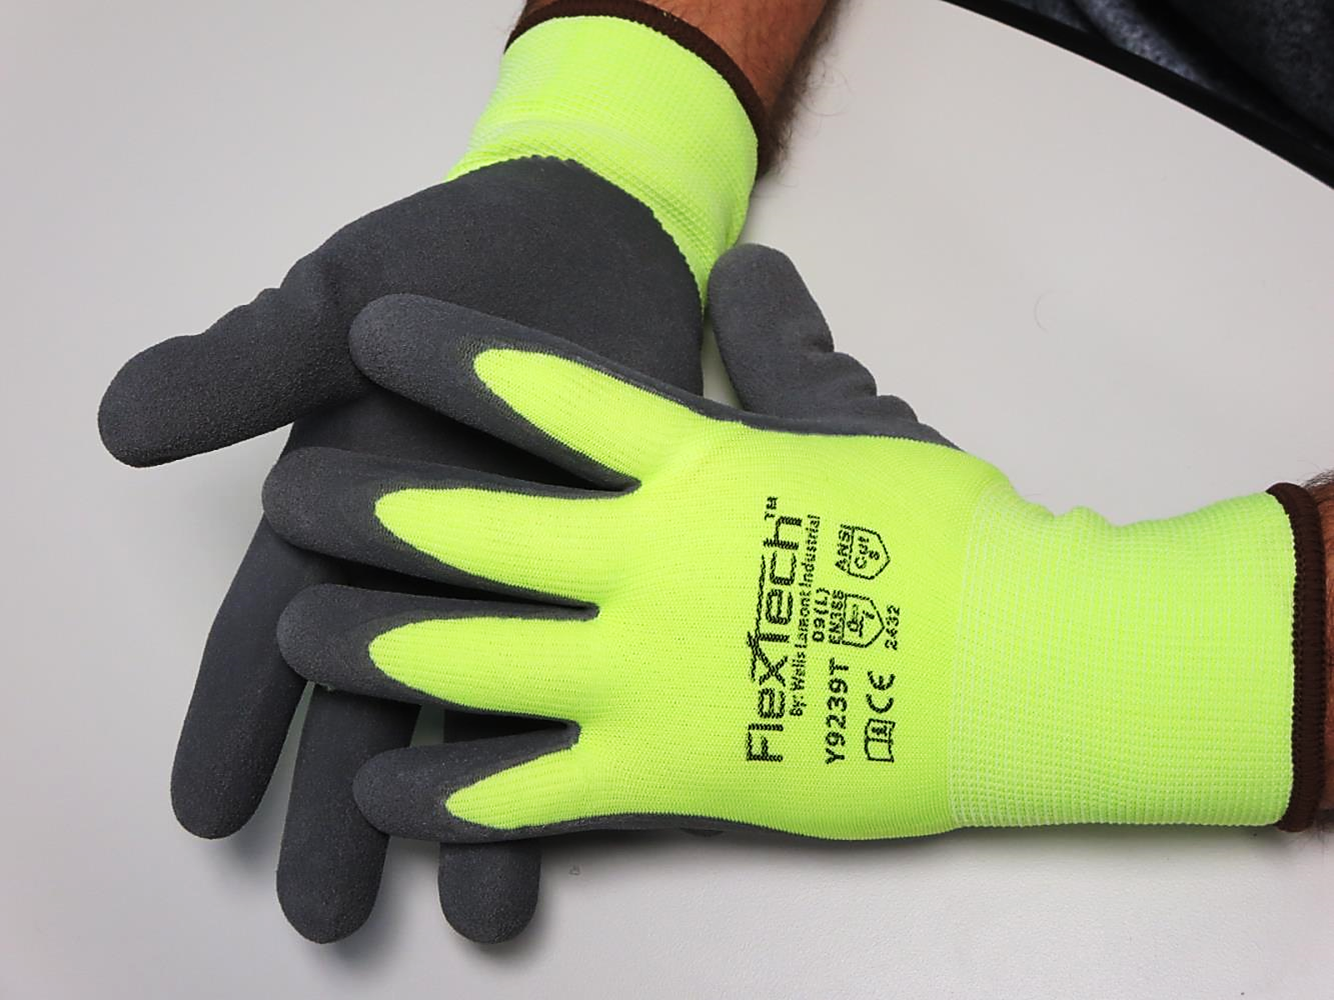 Y9239T Wells Lamont FlexTech™ sandy latex coated hi-viz A3 13-gauge seamless knit fleece lined work gloves